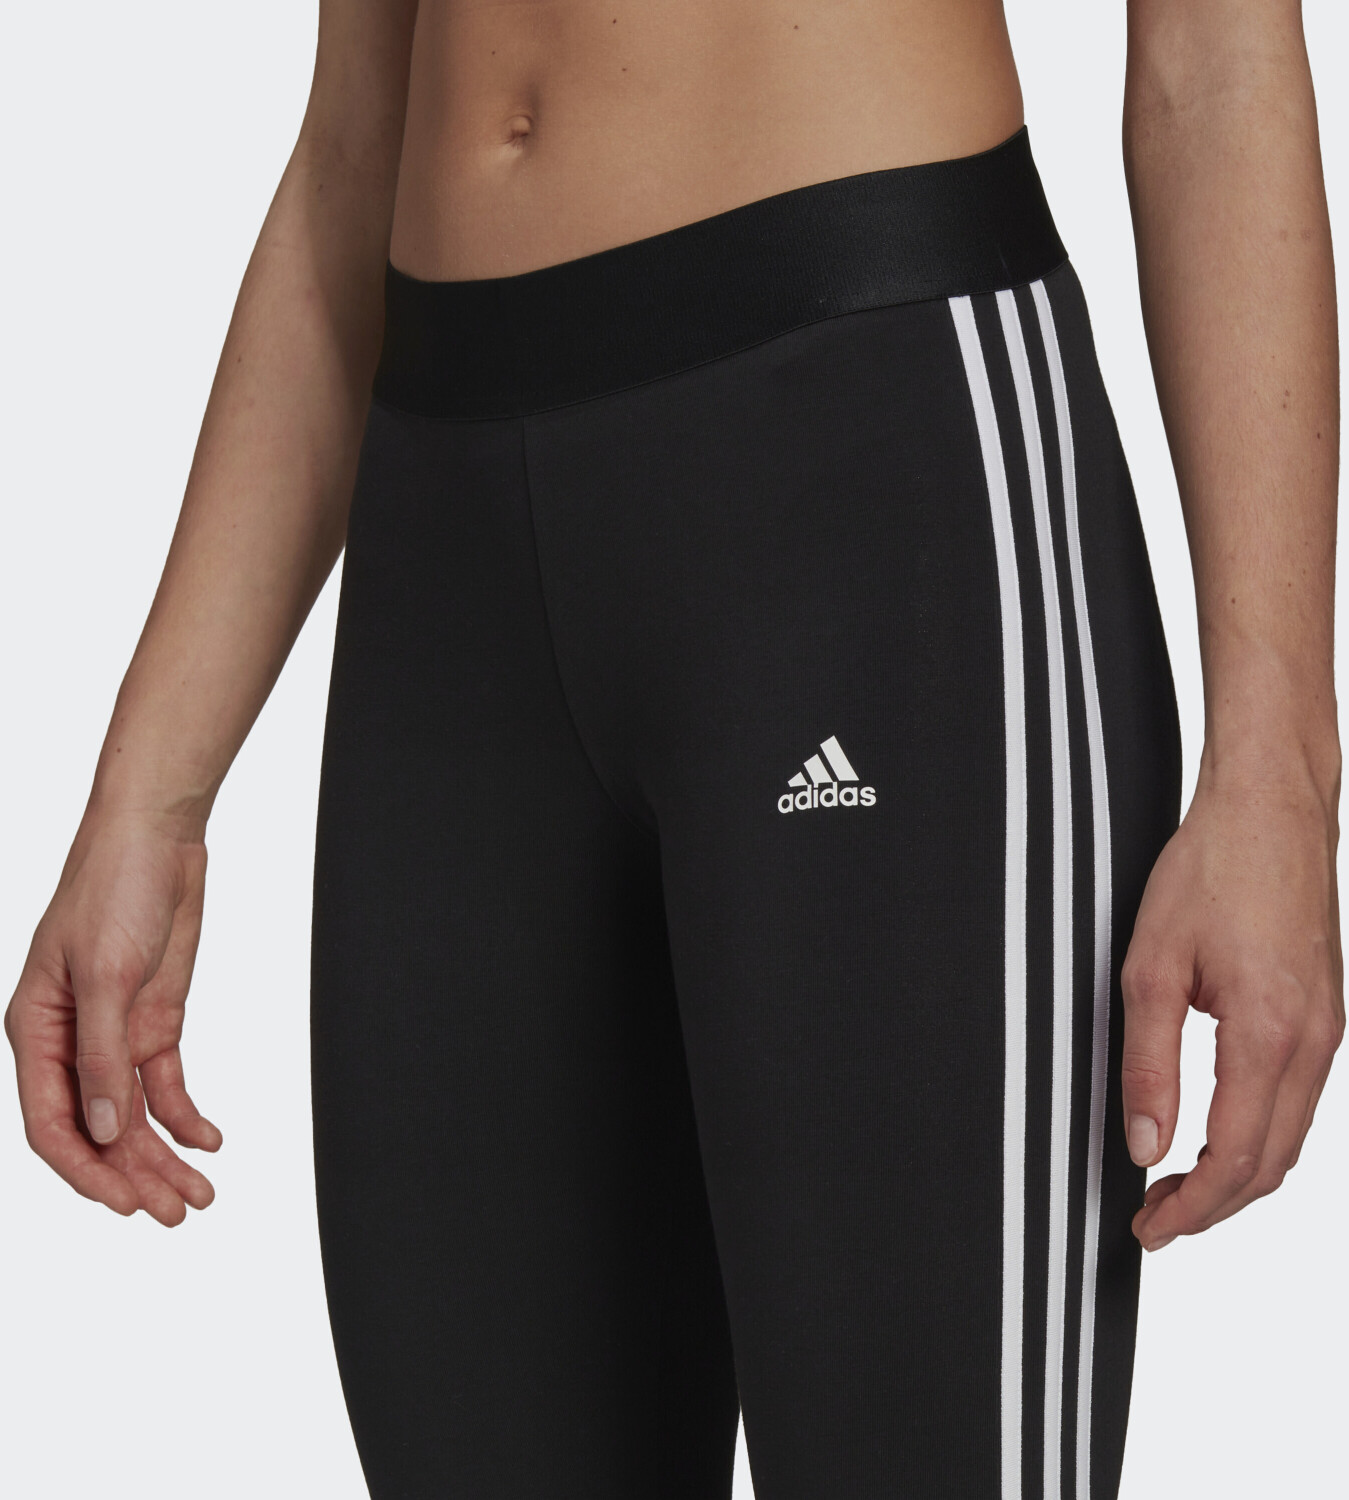 Adidas Woman Essentials 3-Stripes 3/4-Tight black/white (HG5880) ab 19,99 €  | Preisvergleich bei